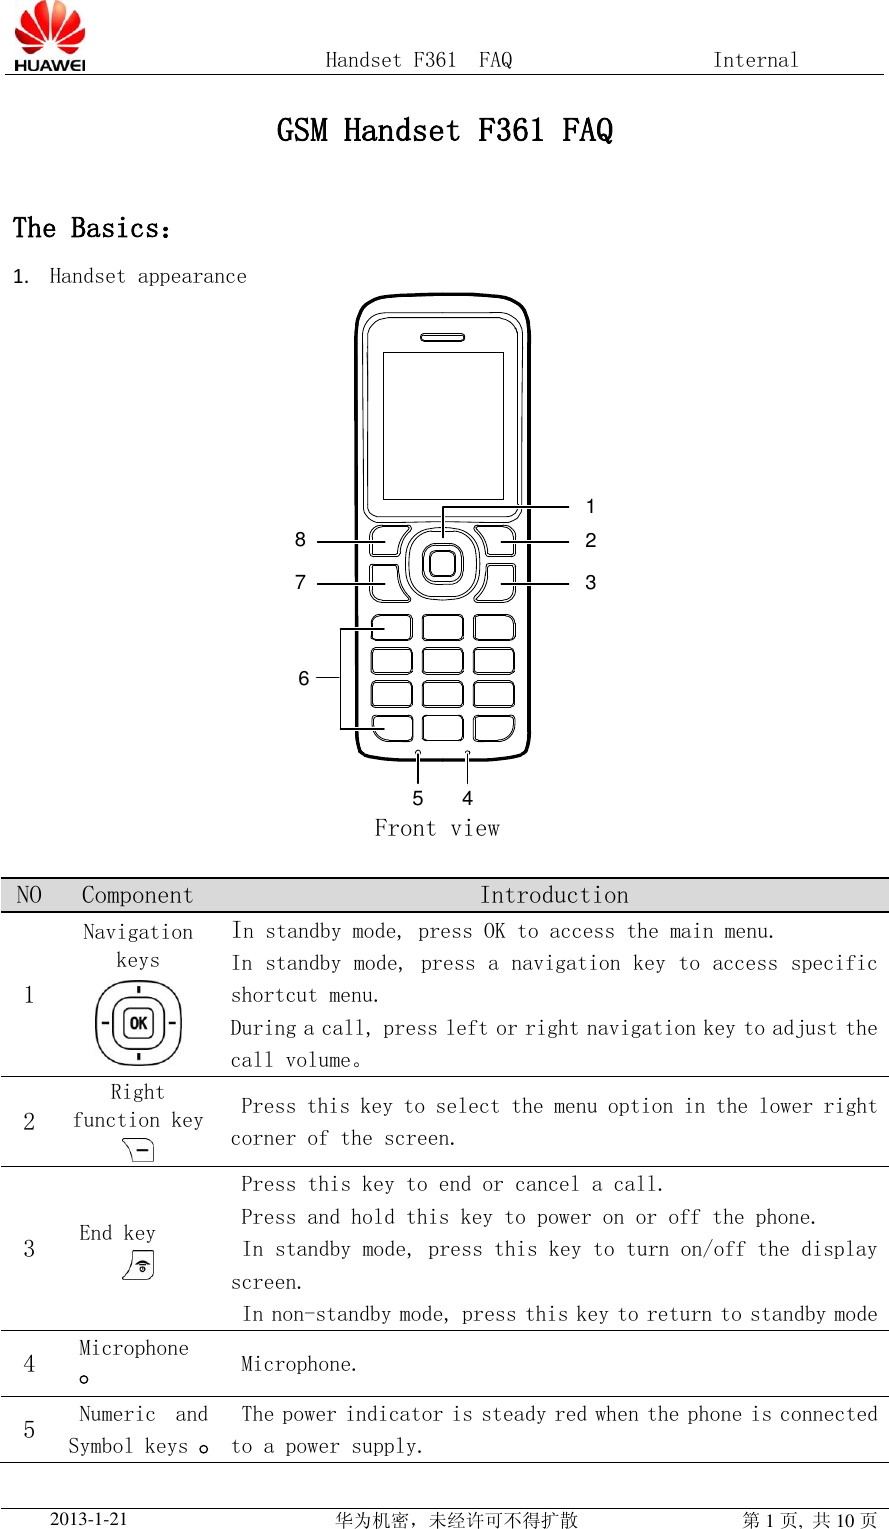 Page 1 of 10 - Huawei 手持机F361 FAQ F361 FAQ(F361, 01, EN)